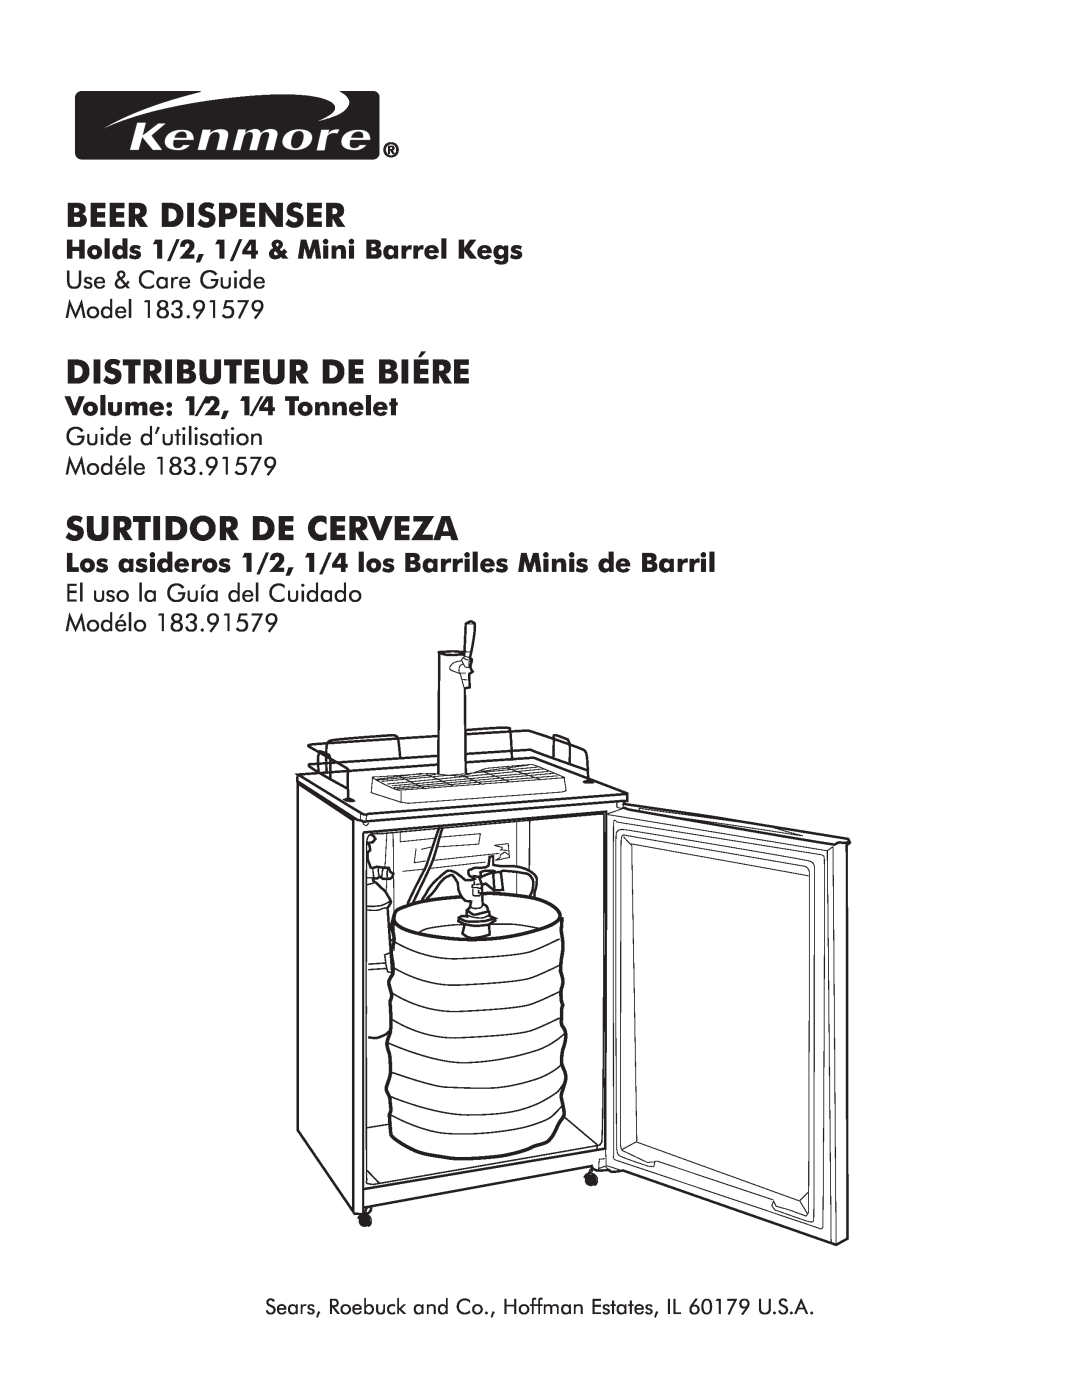 Sears 183.91579 manual Holds 1/2, 1/4 & Mini Barrel Kegs, Volume 1⁄2, 1⁄4 Tonnelet, Beer Dispenser, Distributeur De Biére 